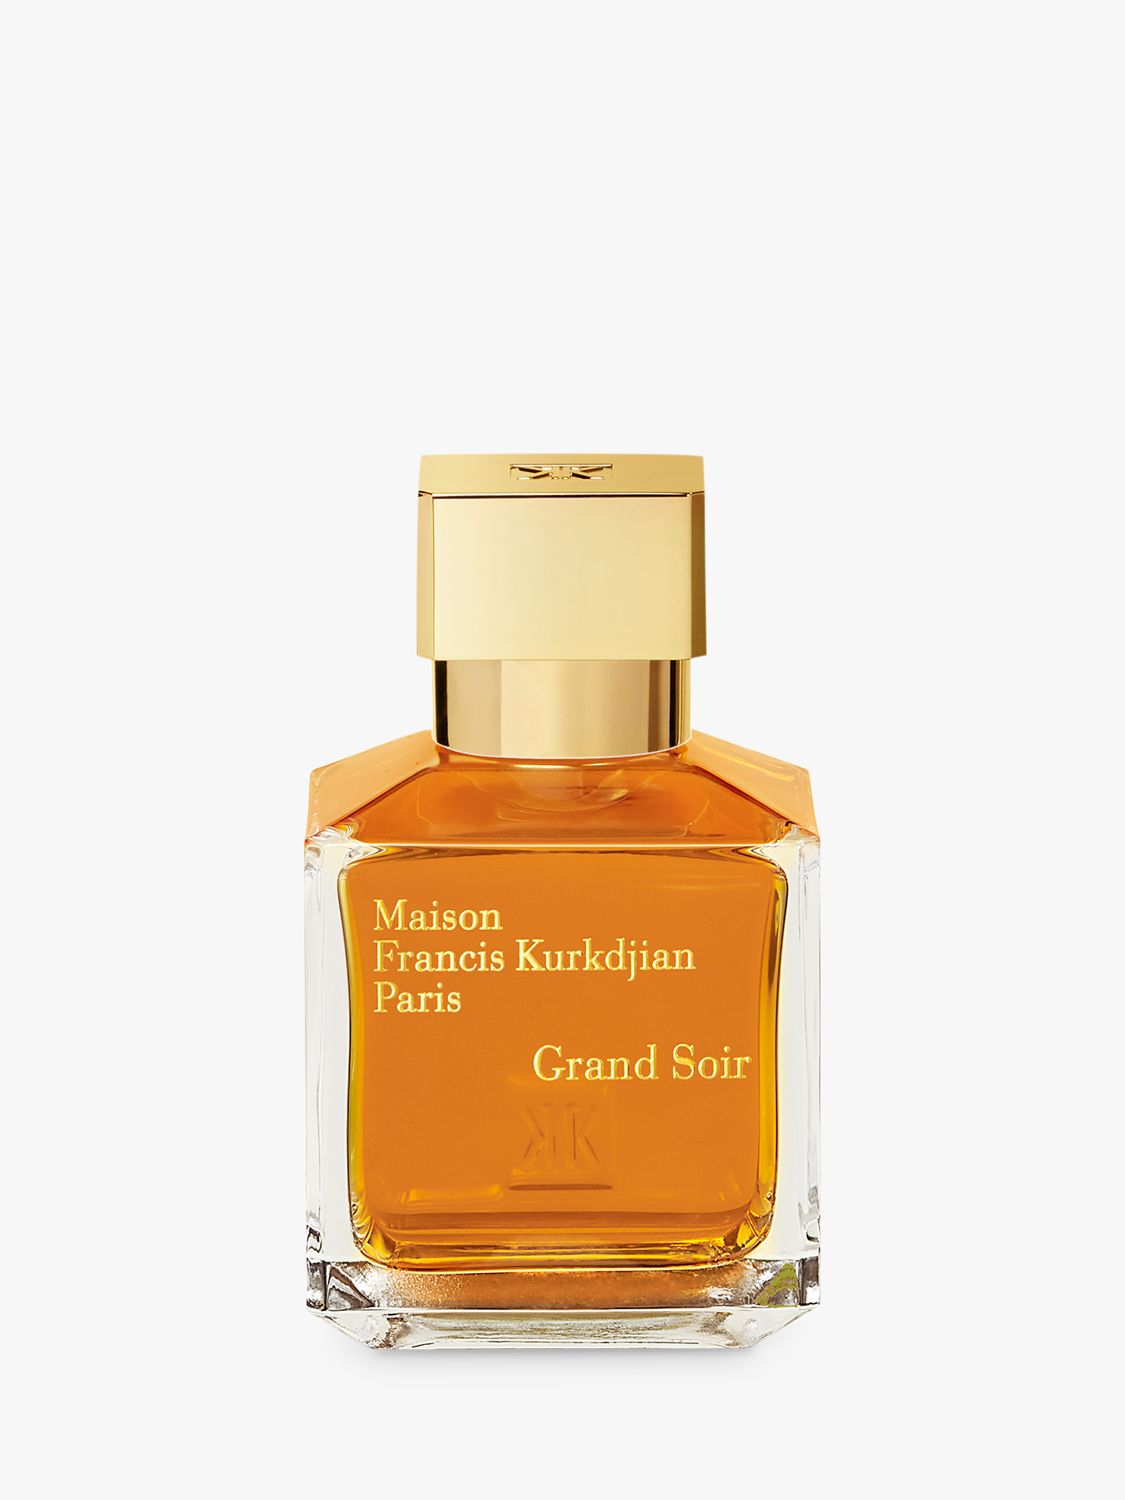 Maison Francis Kurkdjian Grand Soir Eau de Parfum, 70ml 2